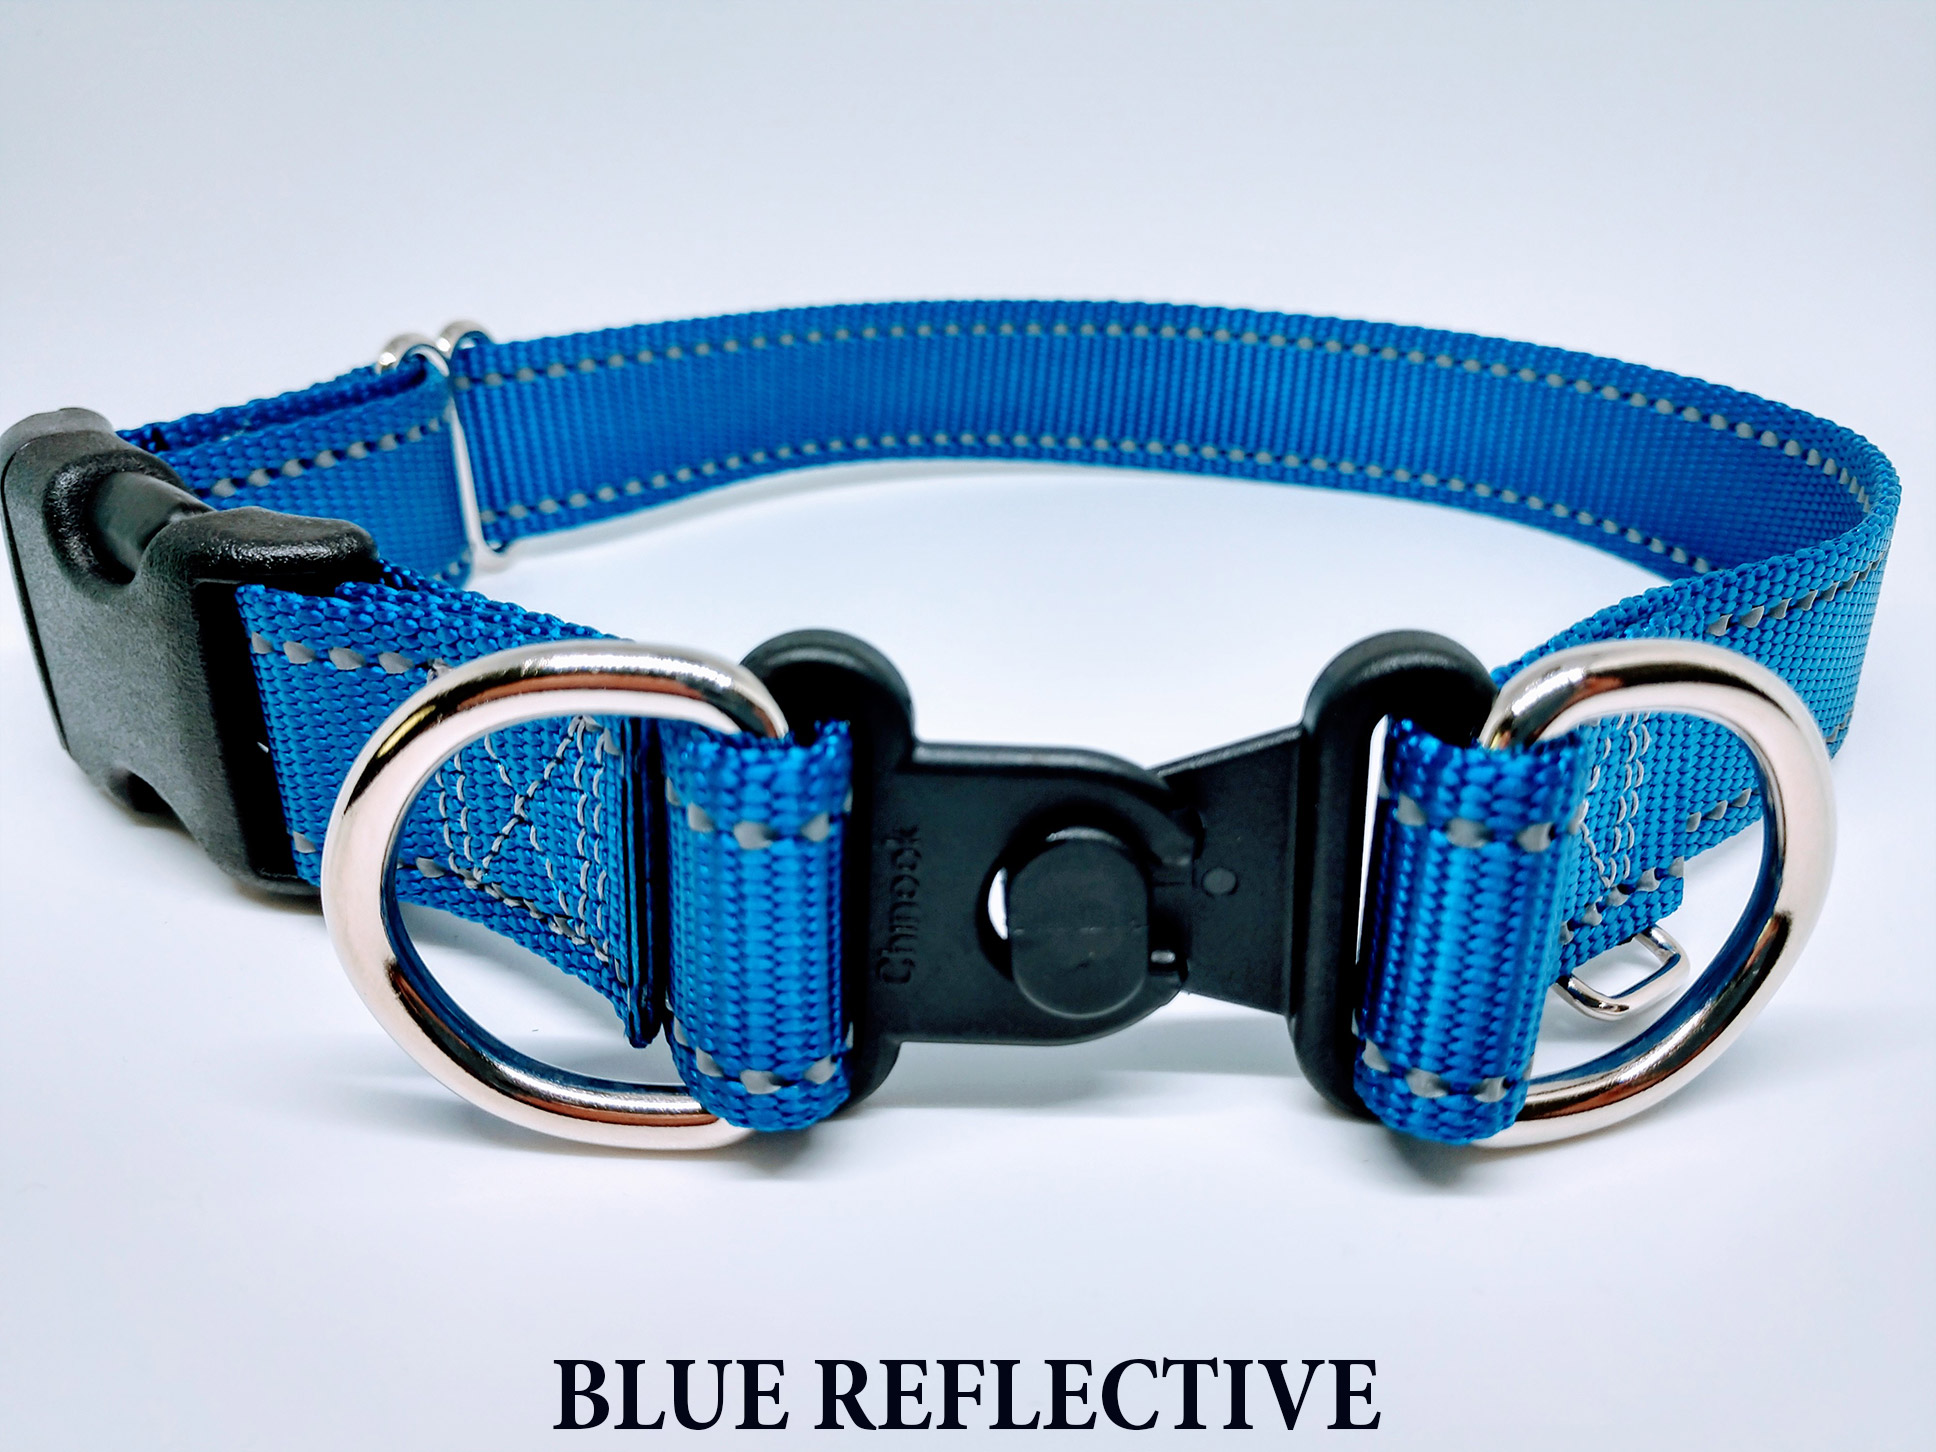 PetSafe Keepsafe 3/4-Inch Medium Break-Away Dog Collar, Royal Blue